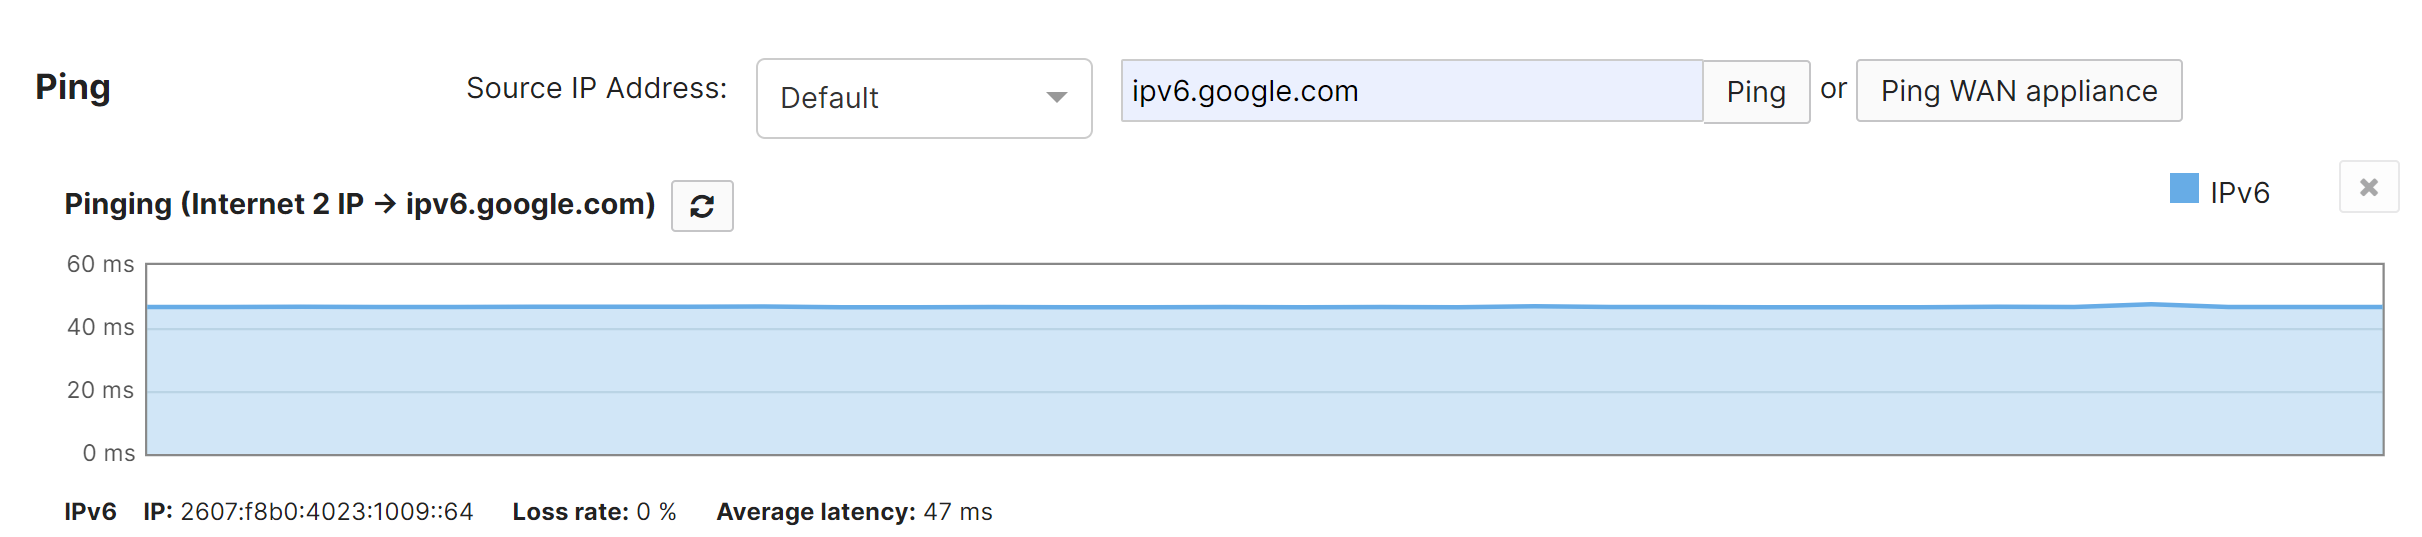 WAN appliance Ping Tool pinging Google IPv6 hostname